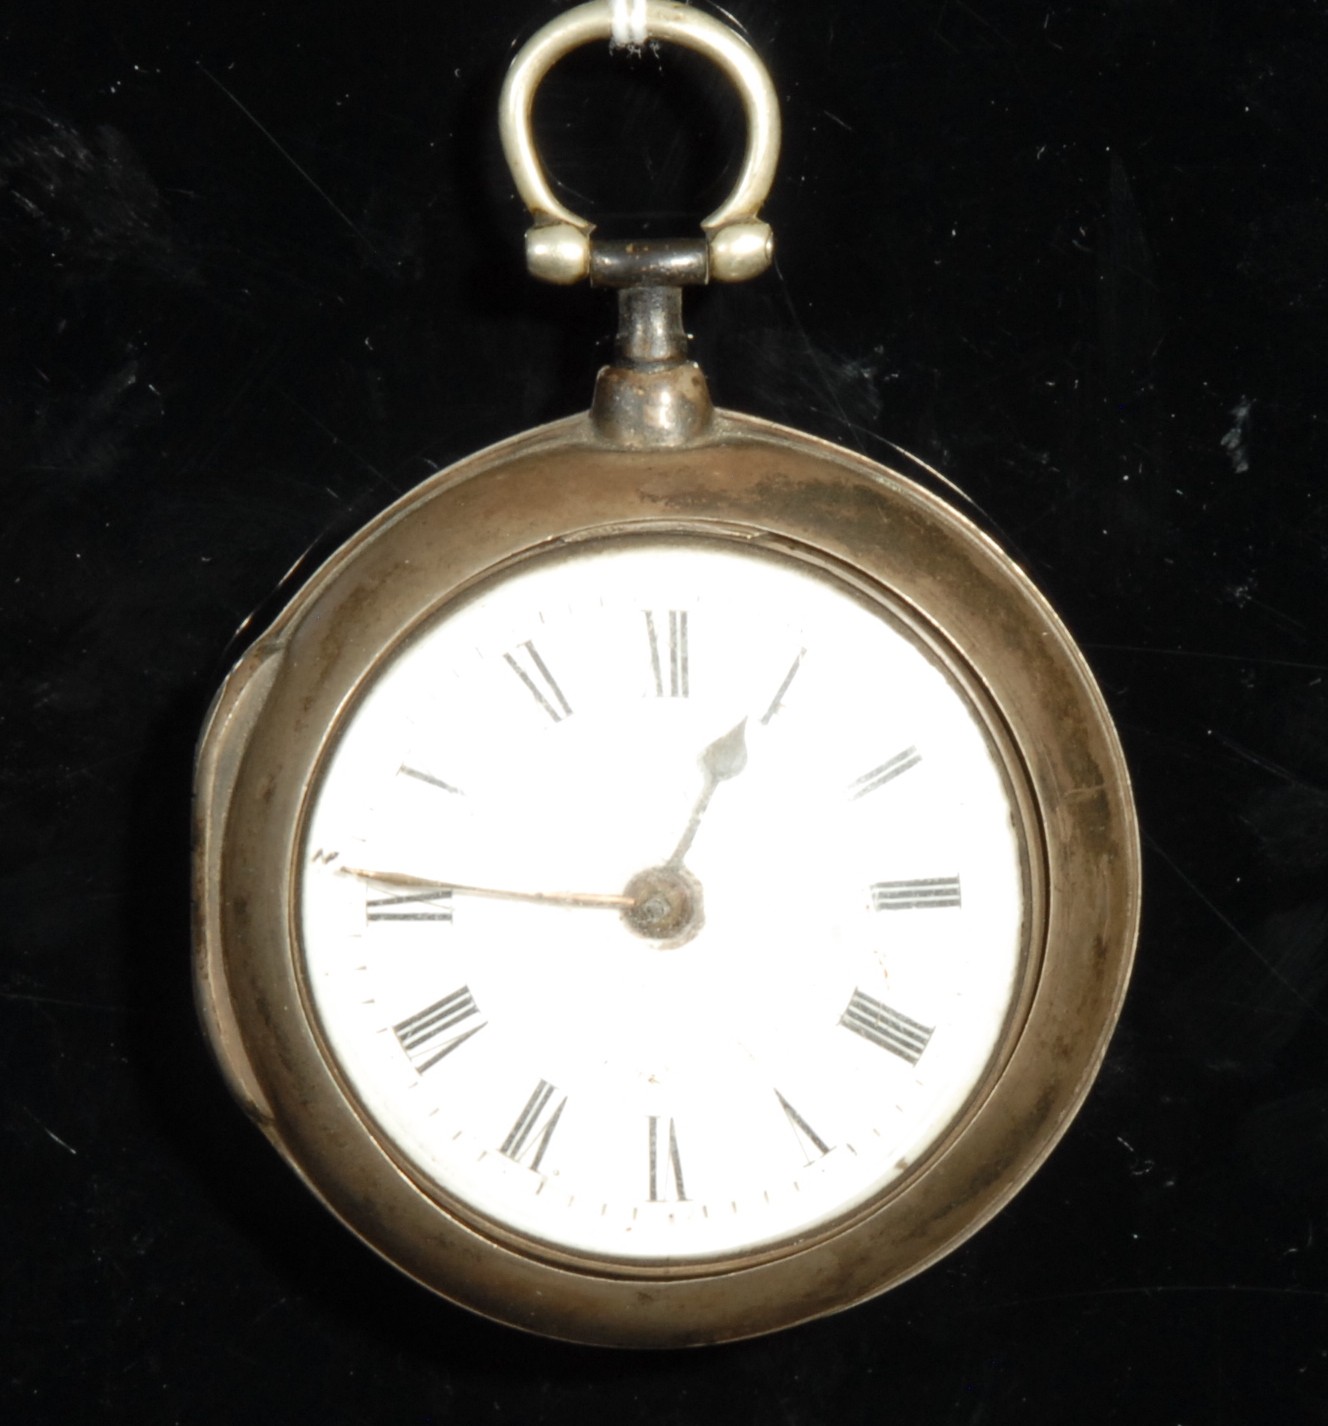 A George III pair cased silver watch Birmingham 1795 enamel 4.1cm dial gilt hands Roman chapter,